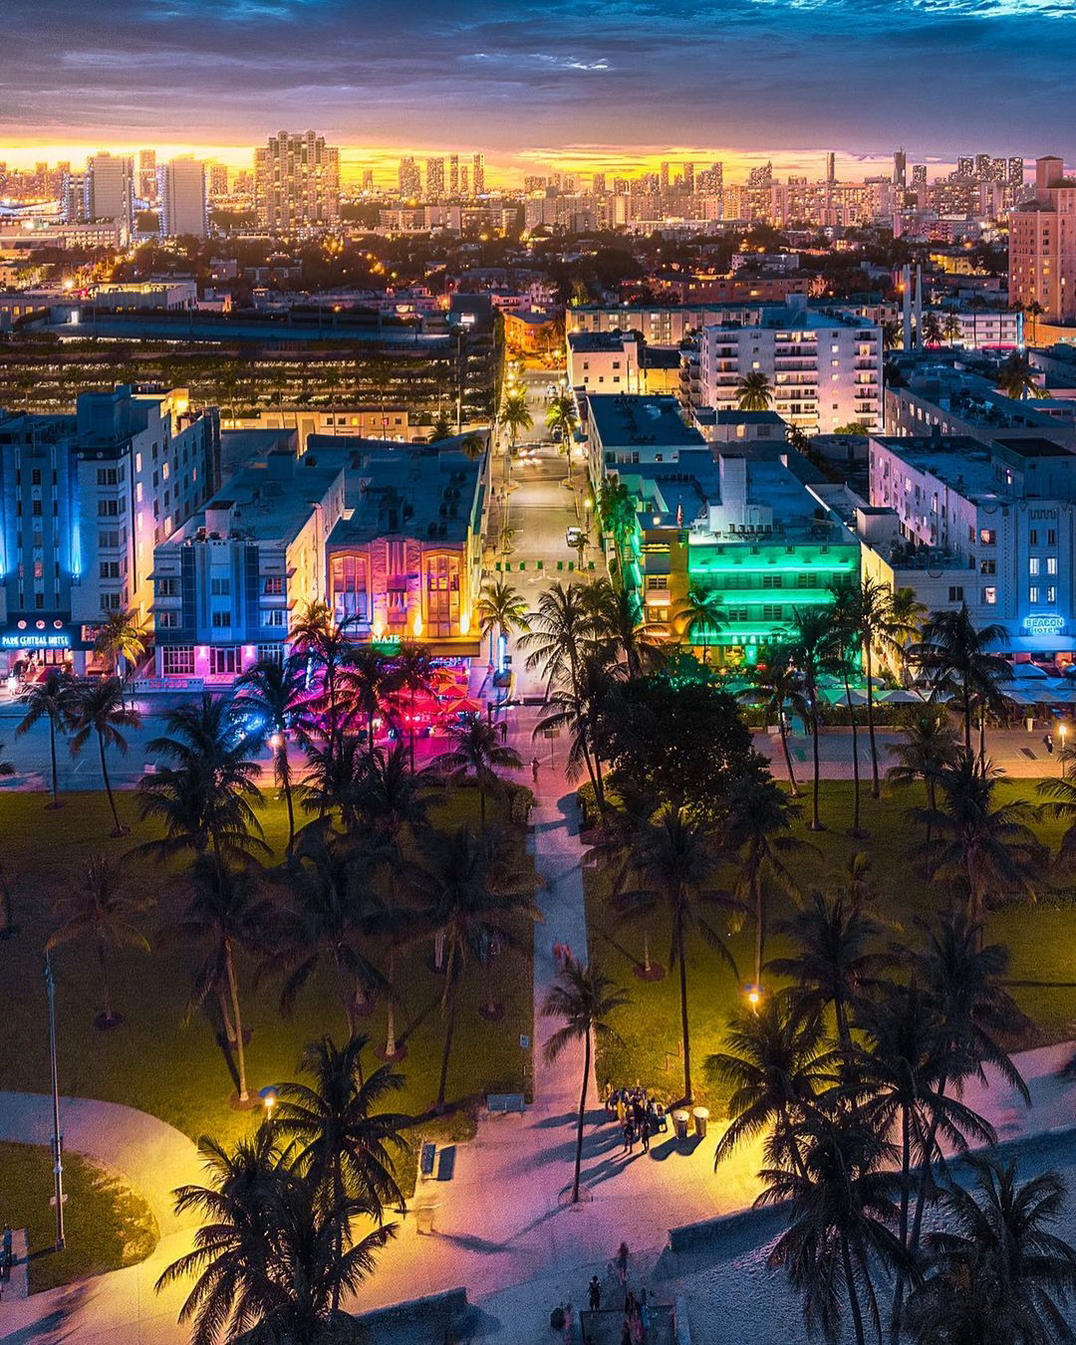 image  1 Miami | Travel community - What’s your favorite Miami Spot